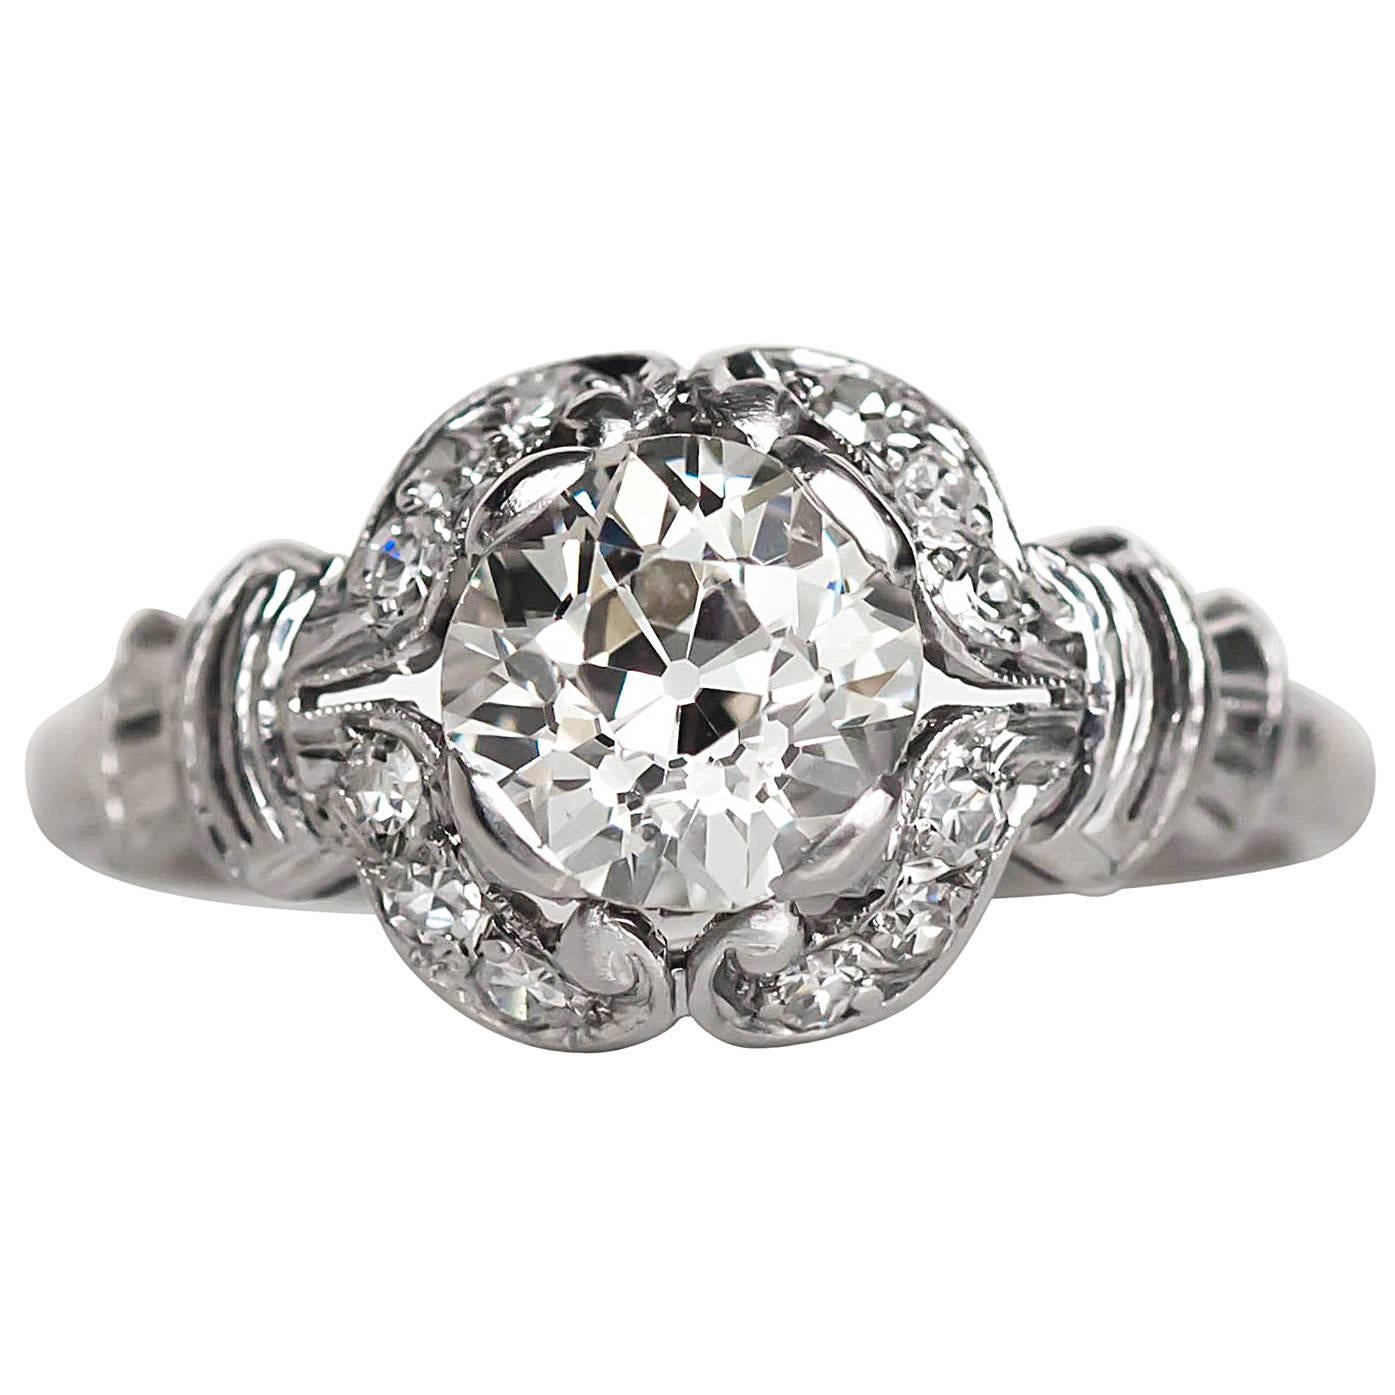 1910 Edwardian Platinum GIA Certified 1.02 Carat Diamond Engagement Ring For Sale